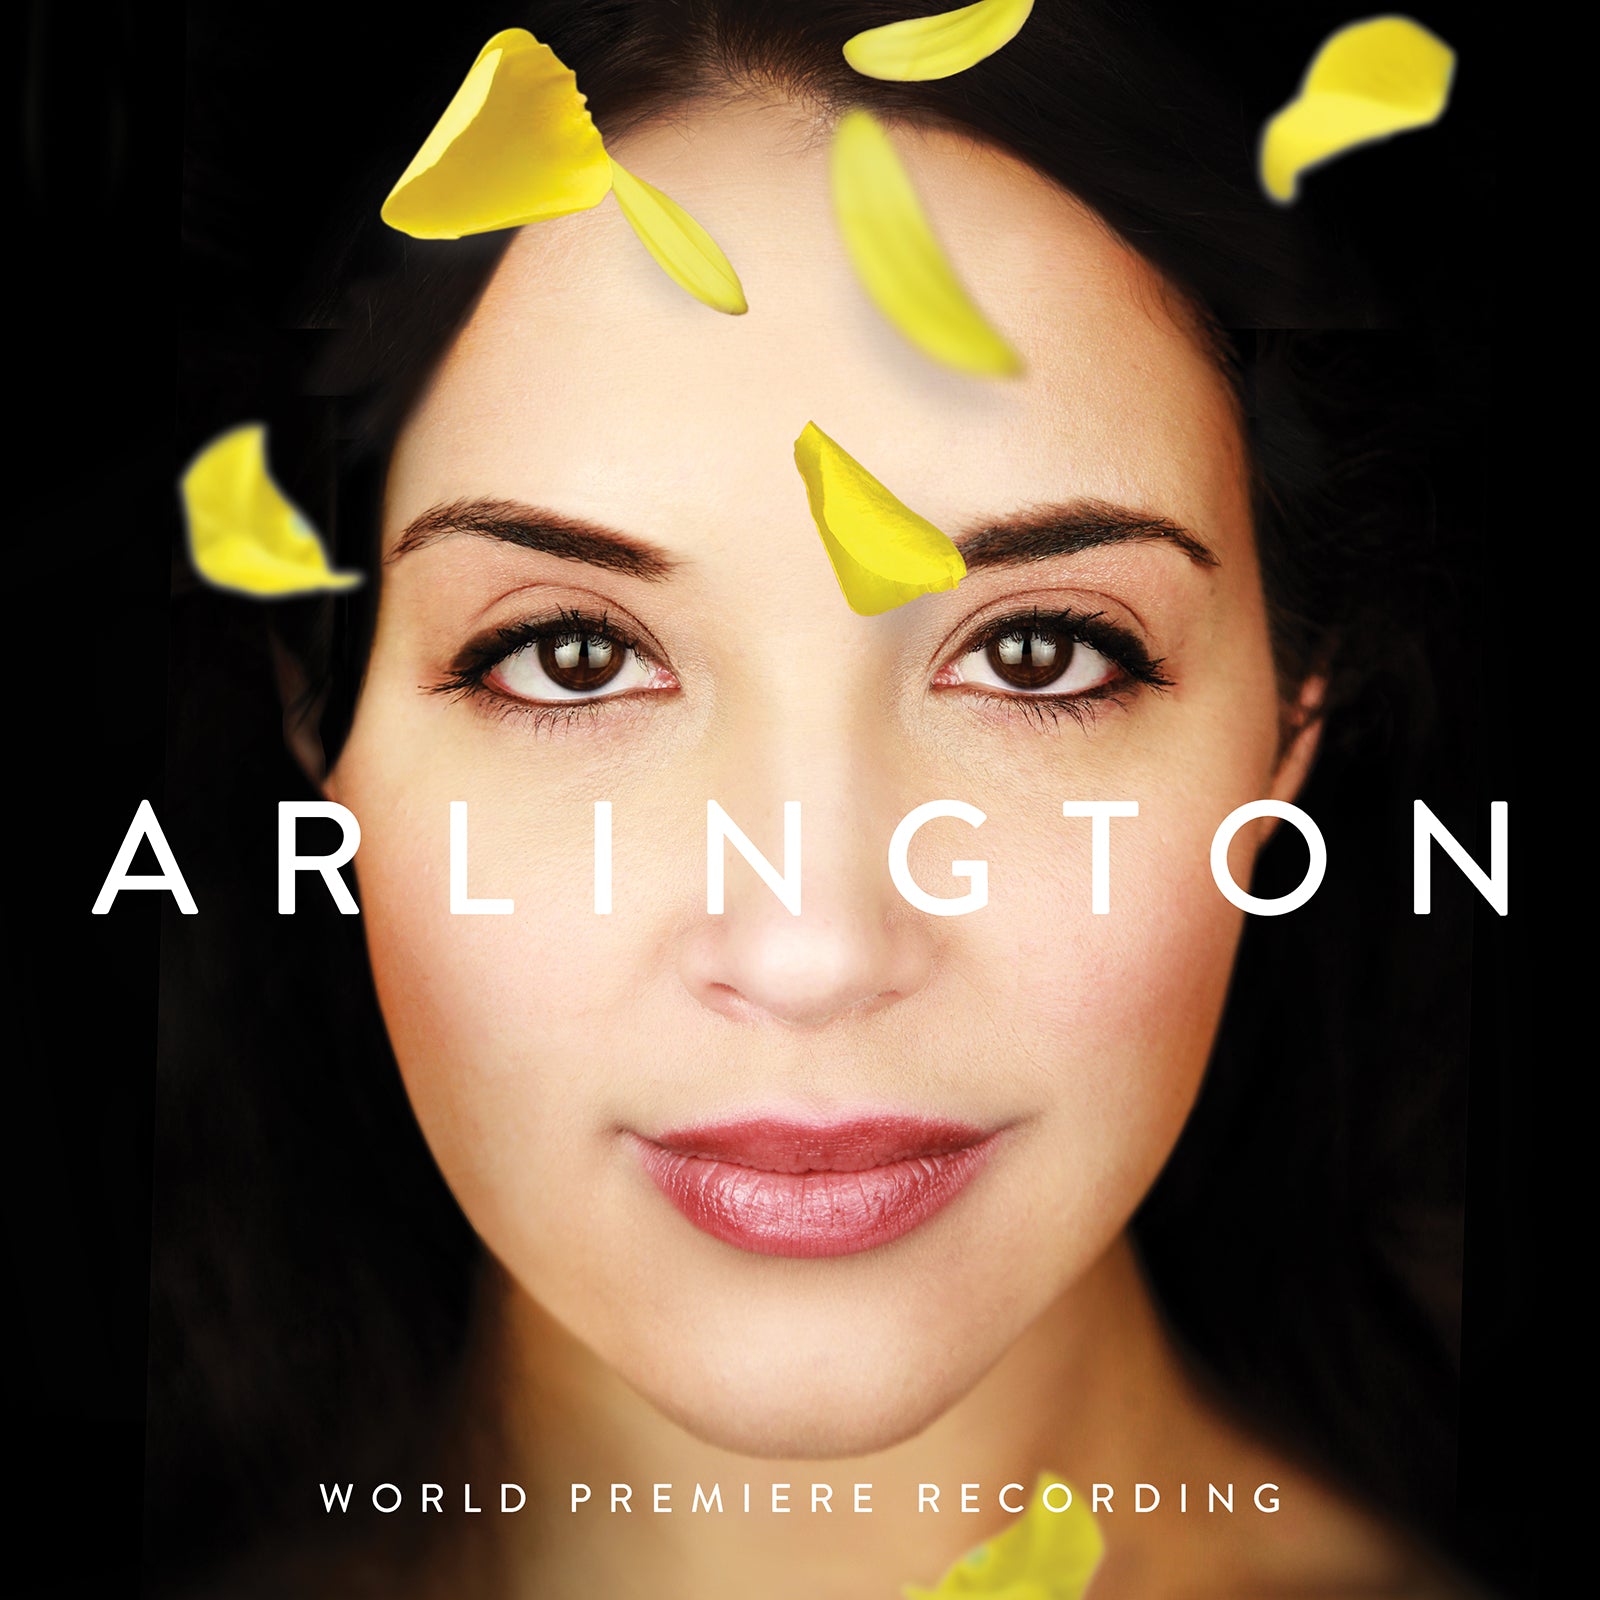 Arlington (World Premiere Recording) [CD]